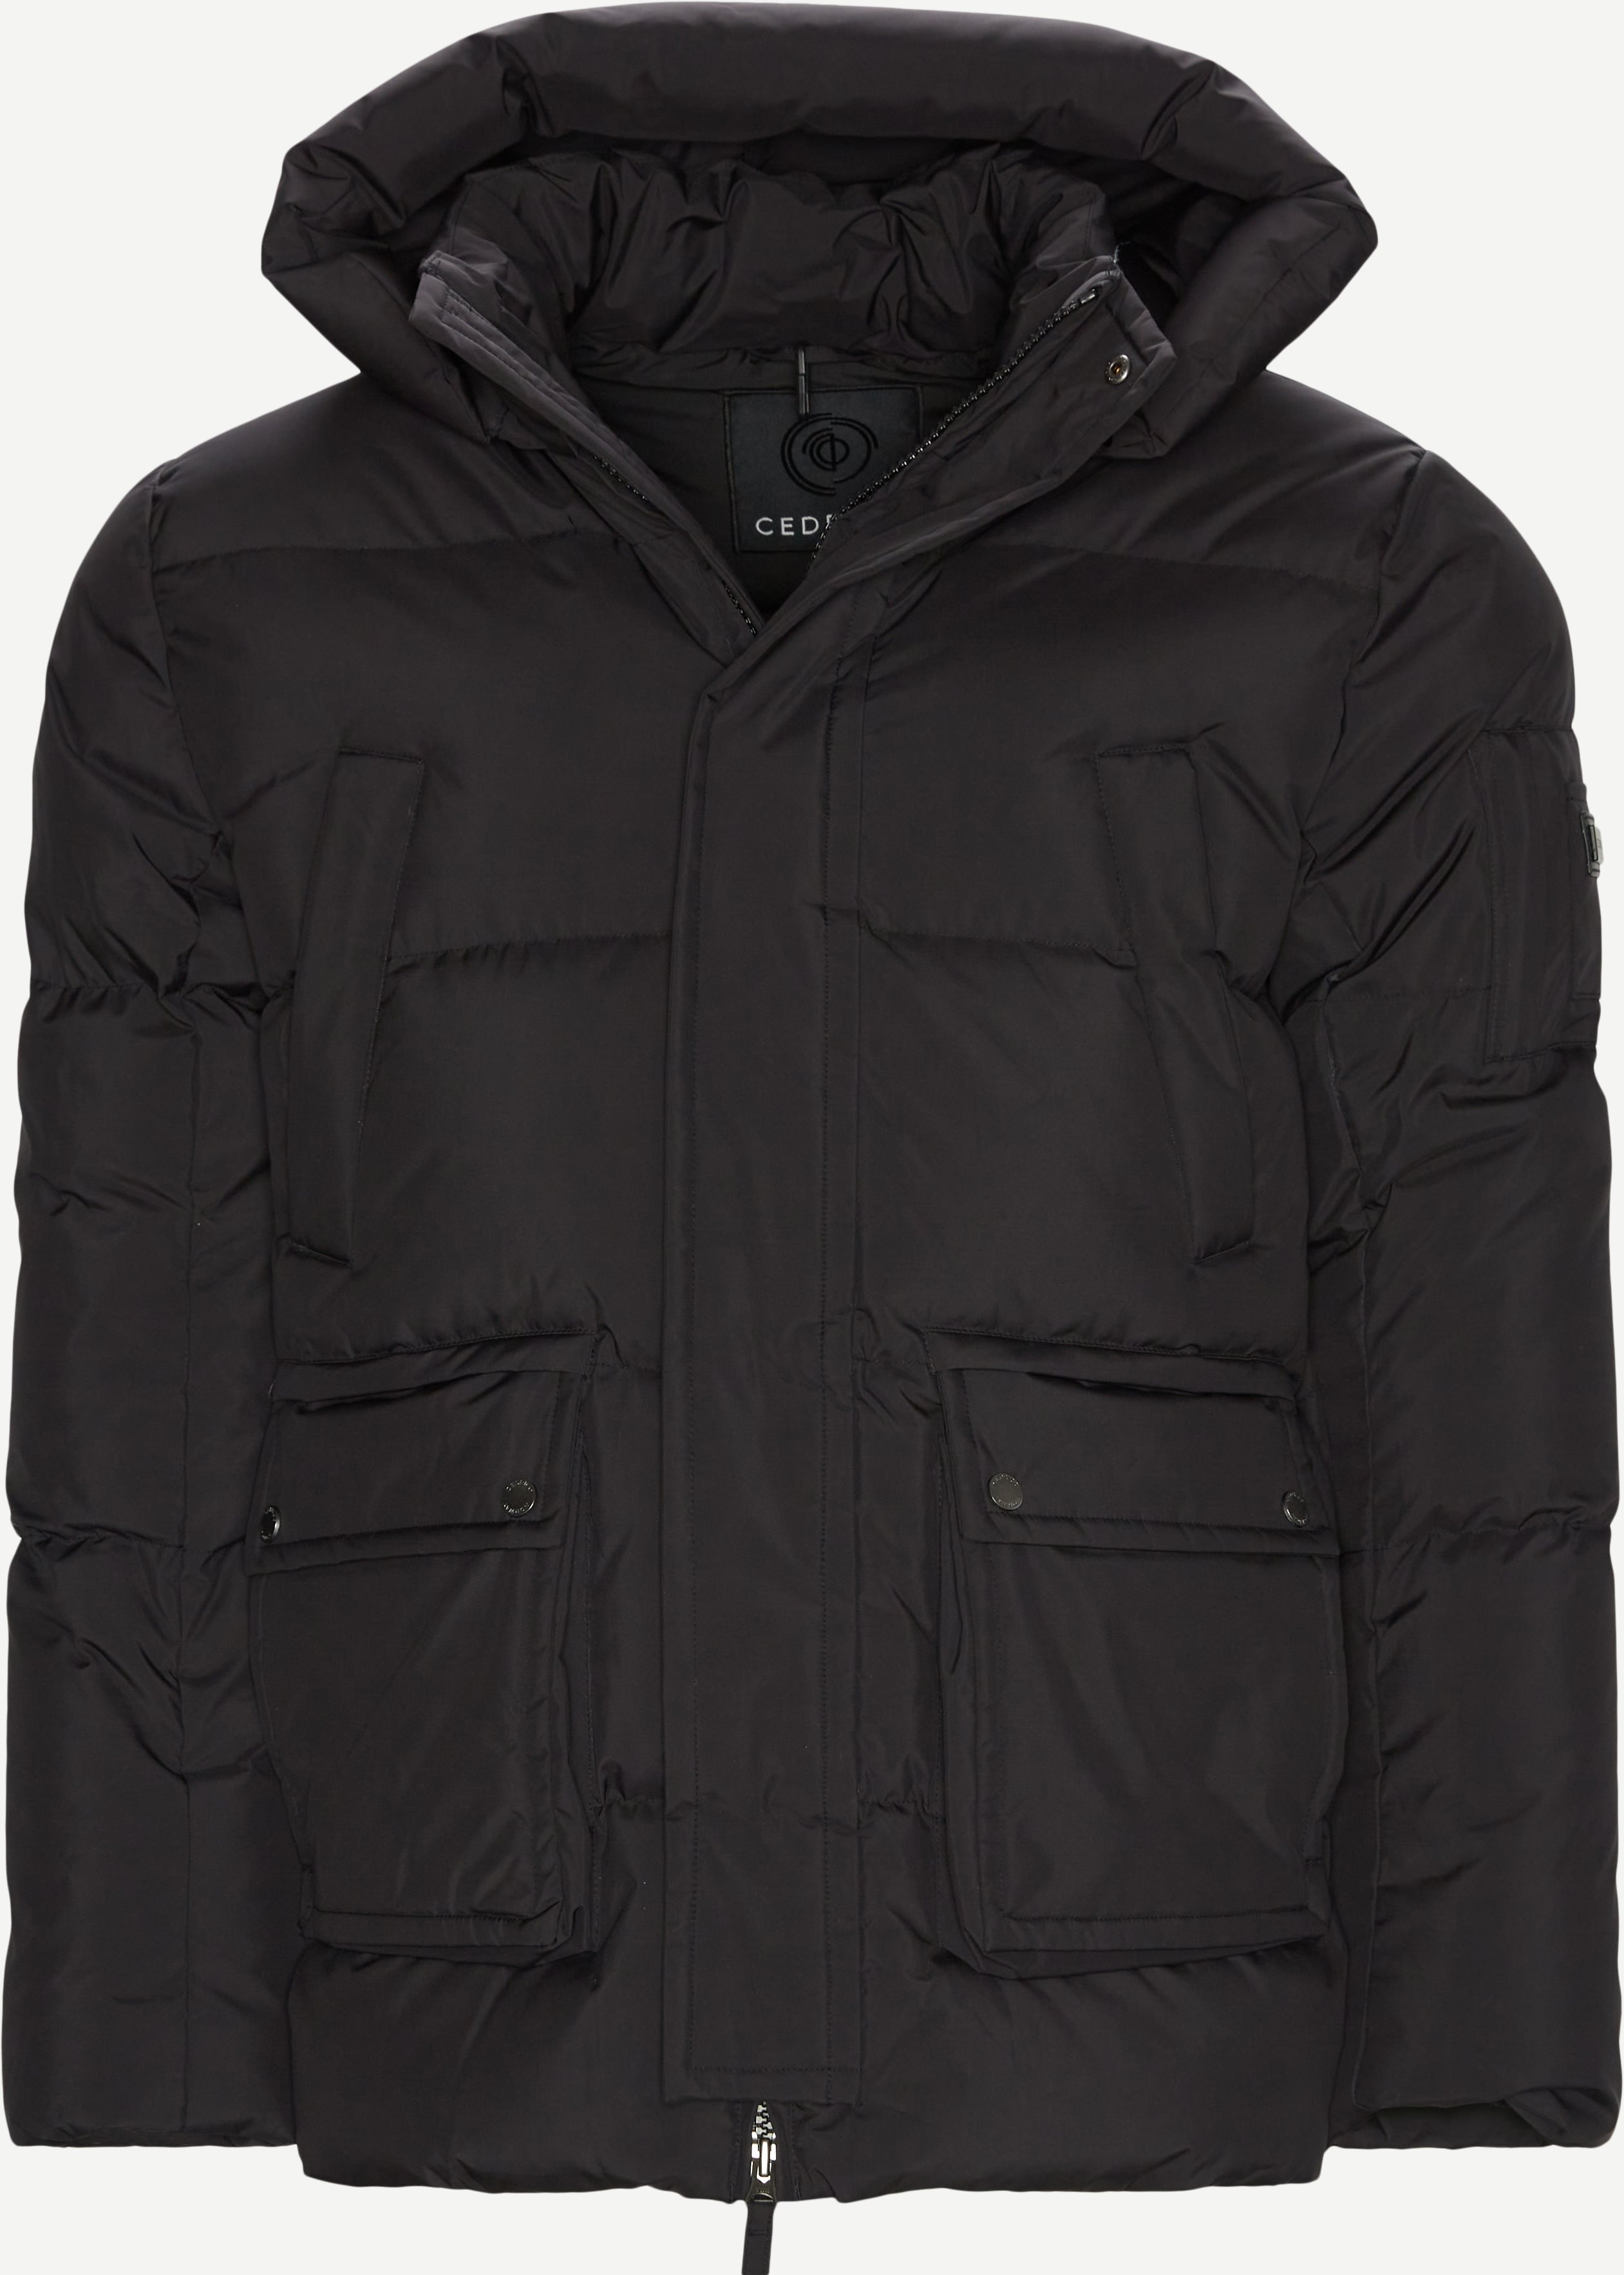 Gilbert Winter Jacket - Jackets - Regular fit - Black